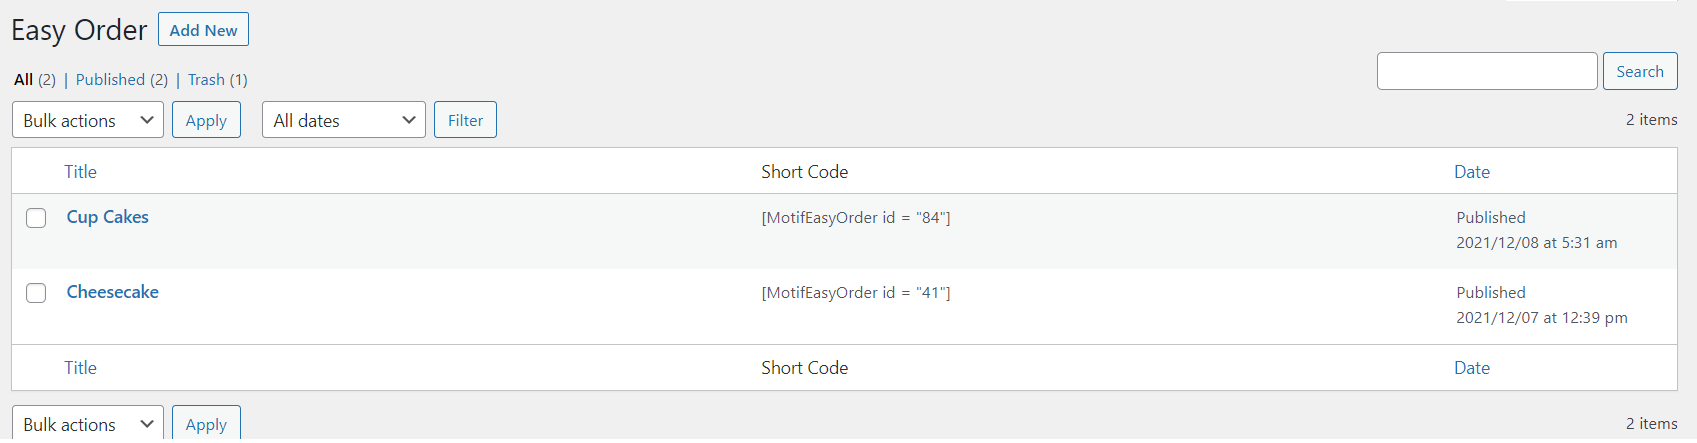 WooCommerce Quick Order - Easy Order - 6